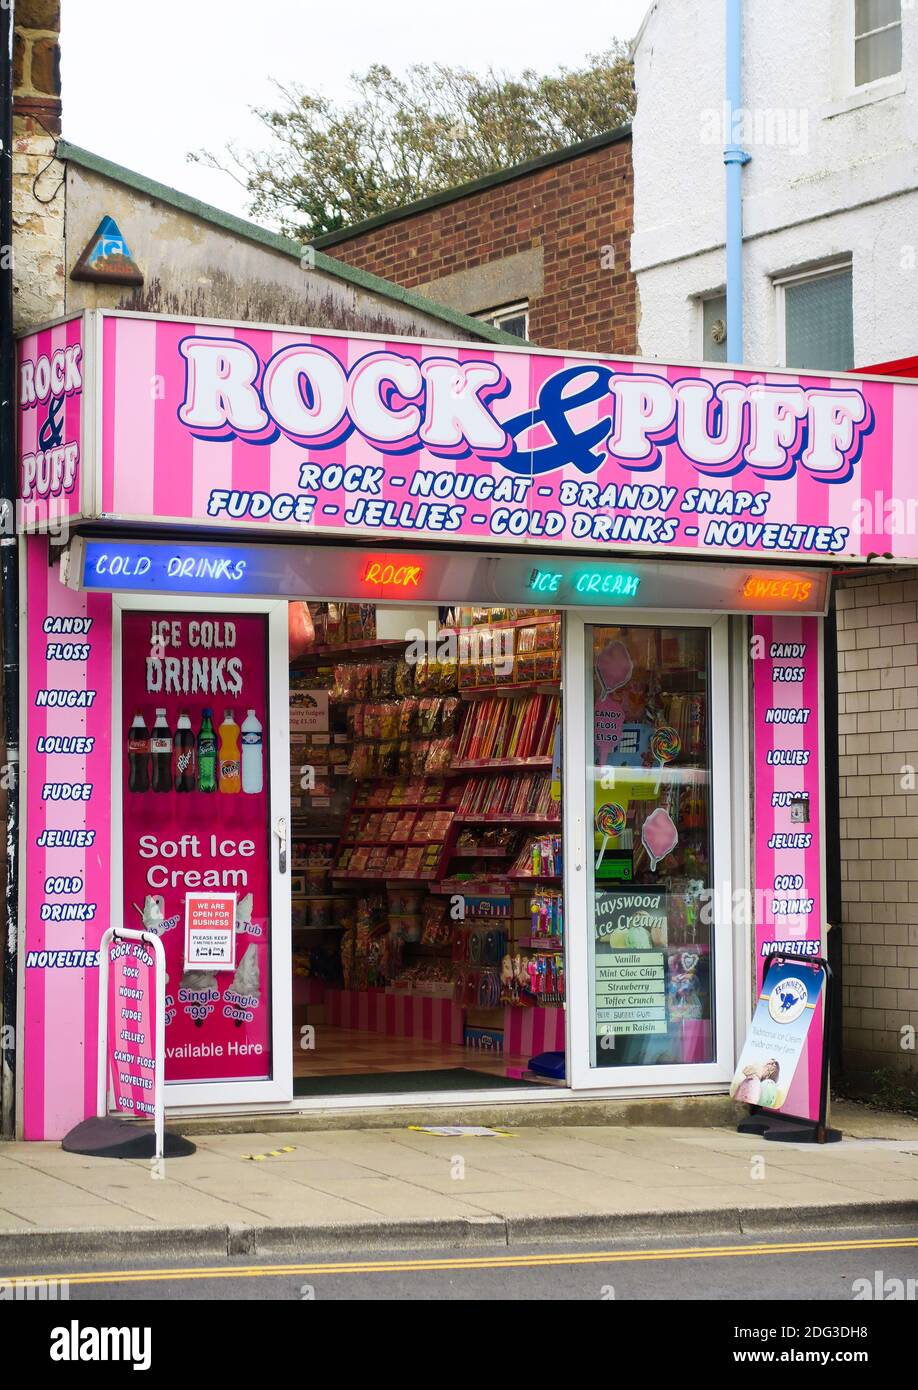 Rock and Puff seaside shop in Hunstanton Stock Photo - Alamy